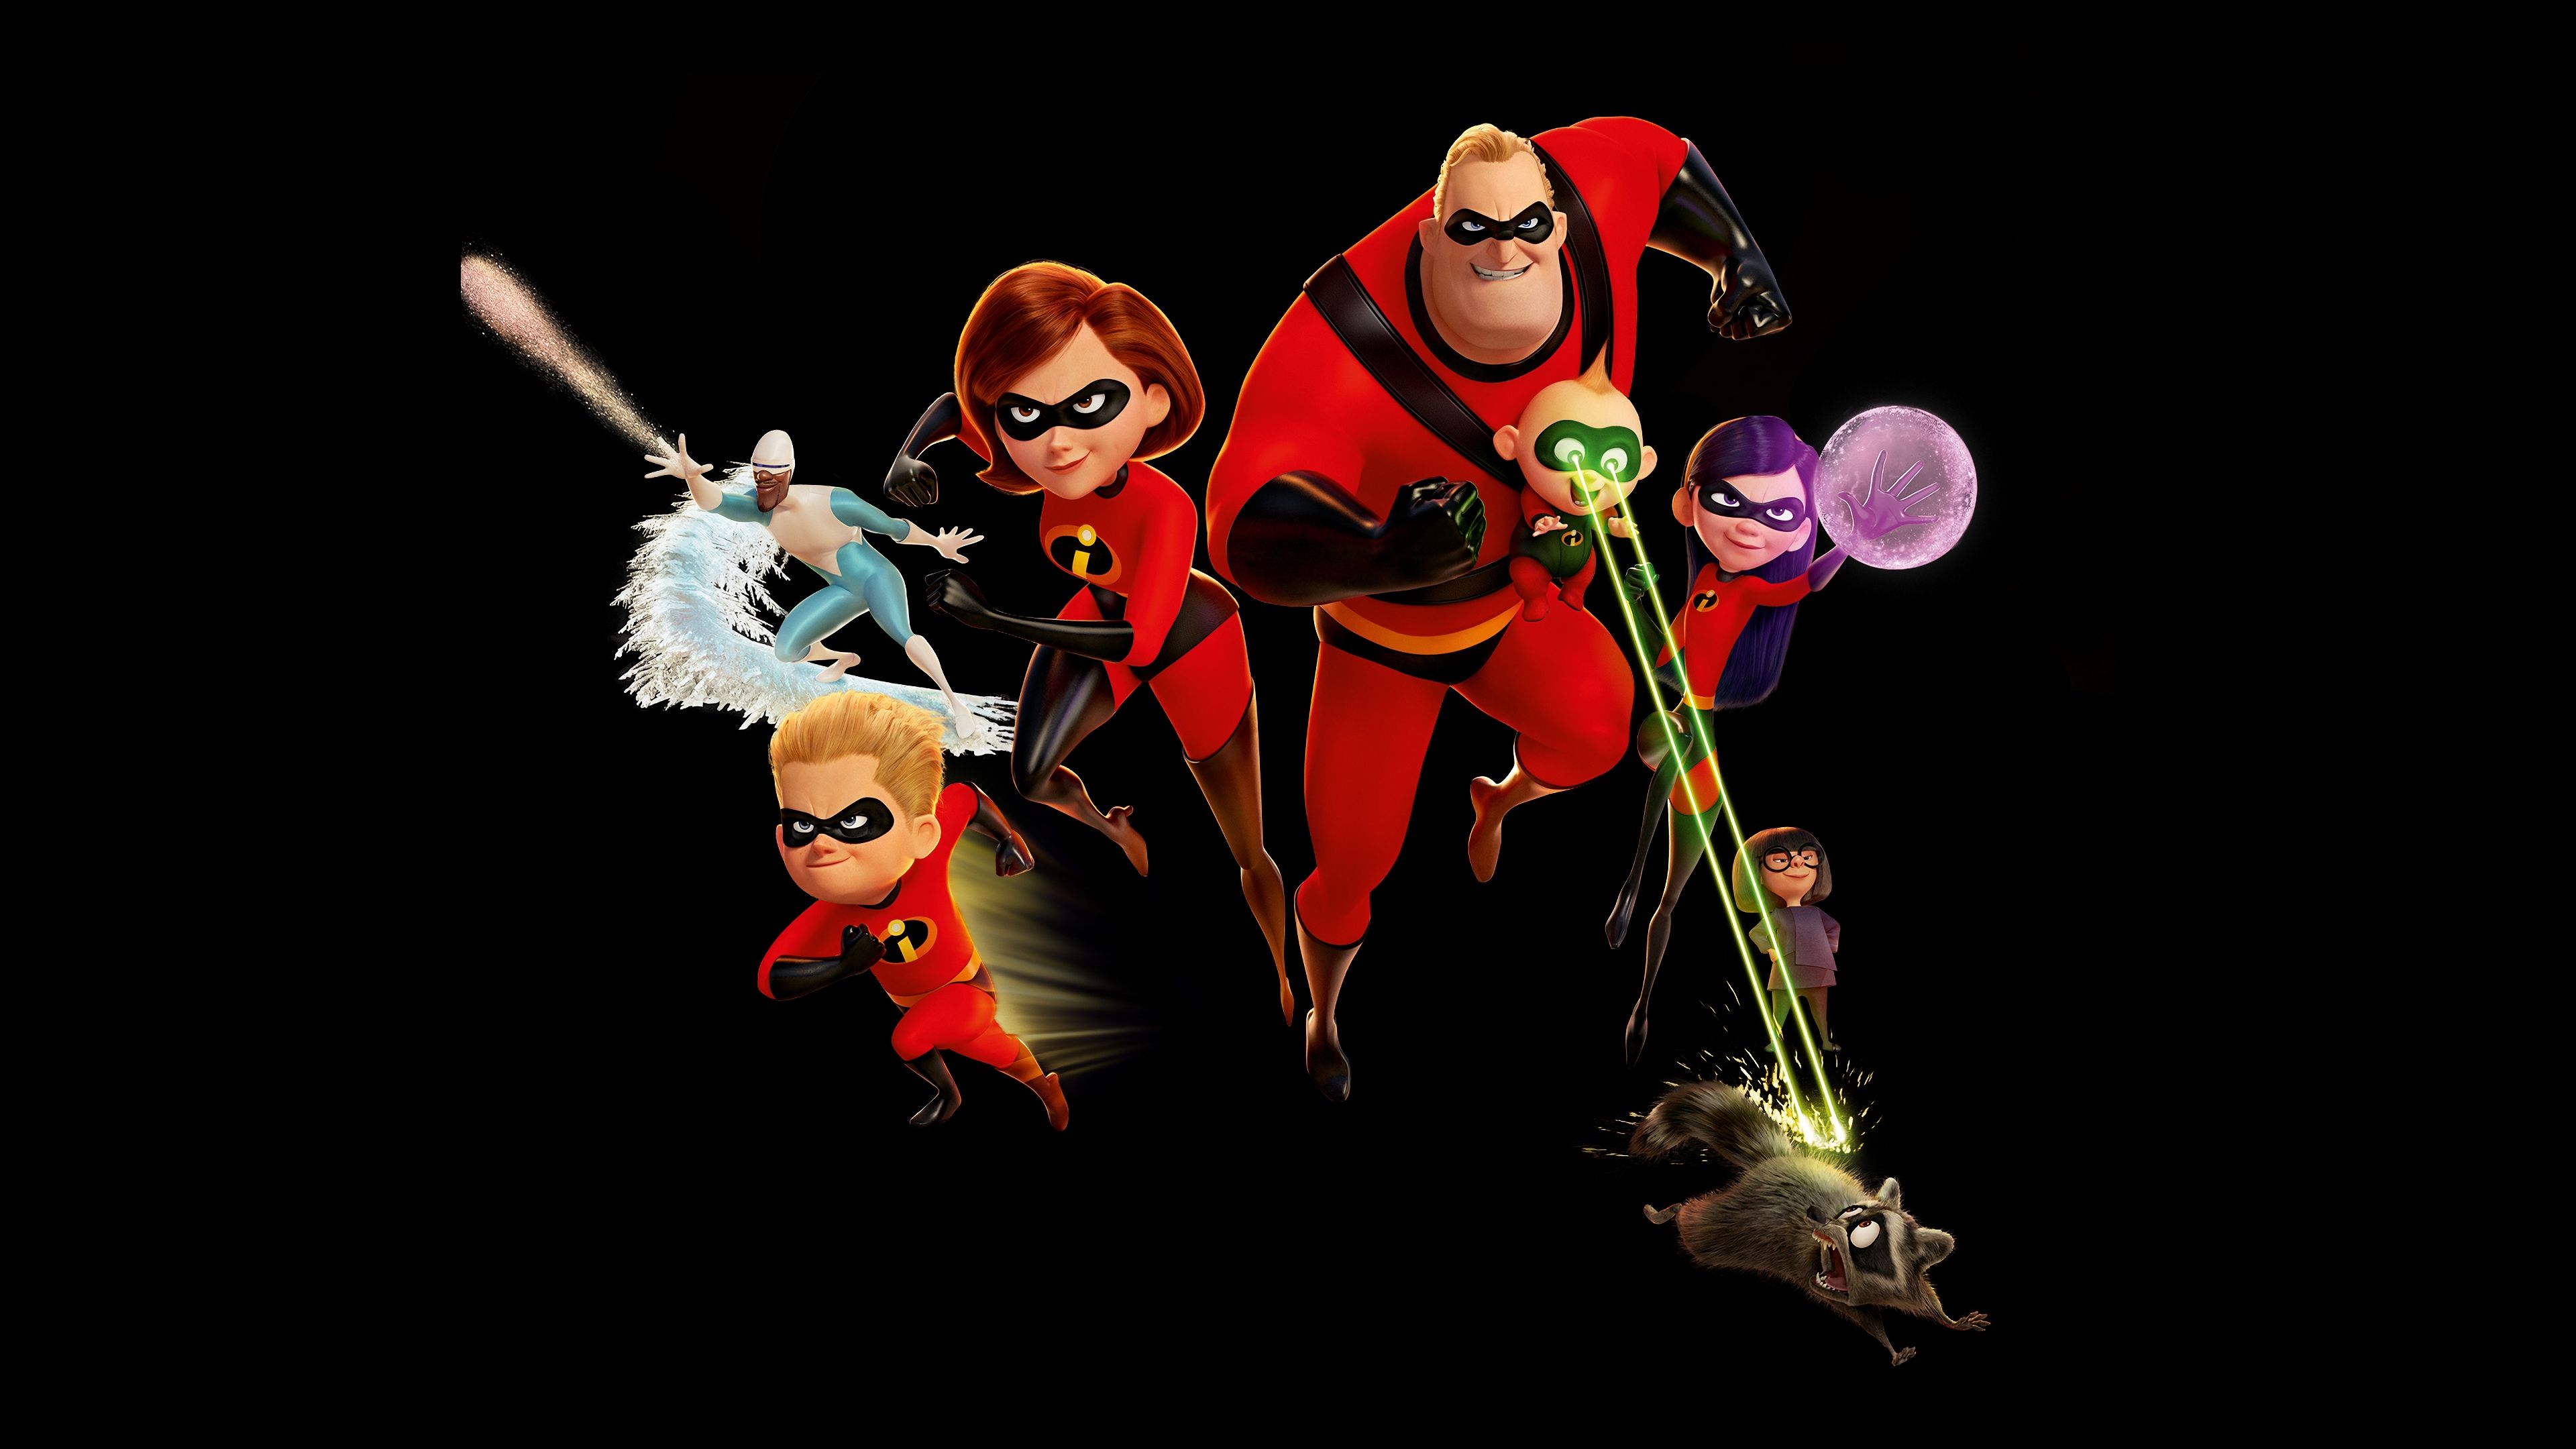 3840x2160 The Incredibles 2 Characters Mr Incredible Elastigirl Jack Jack Violet Dash Frozone Edna 4k